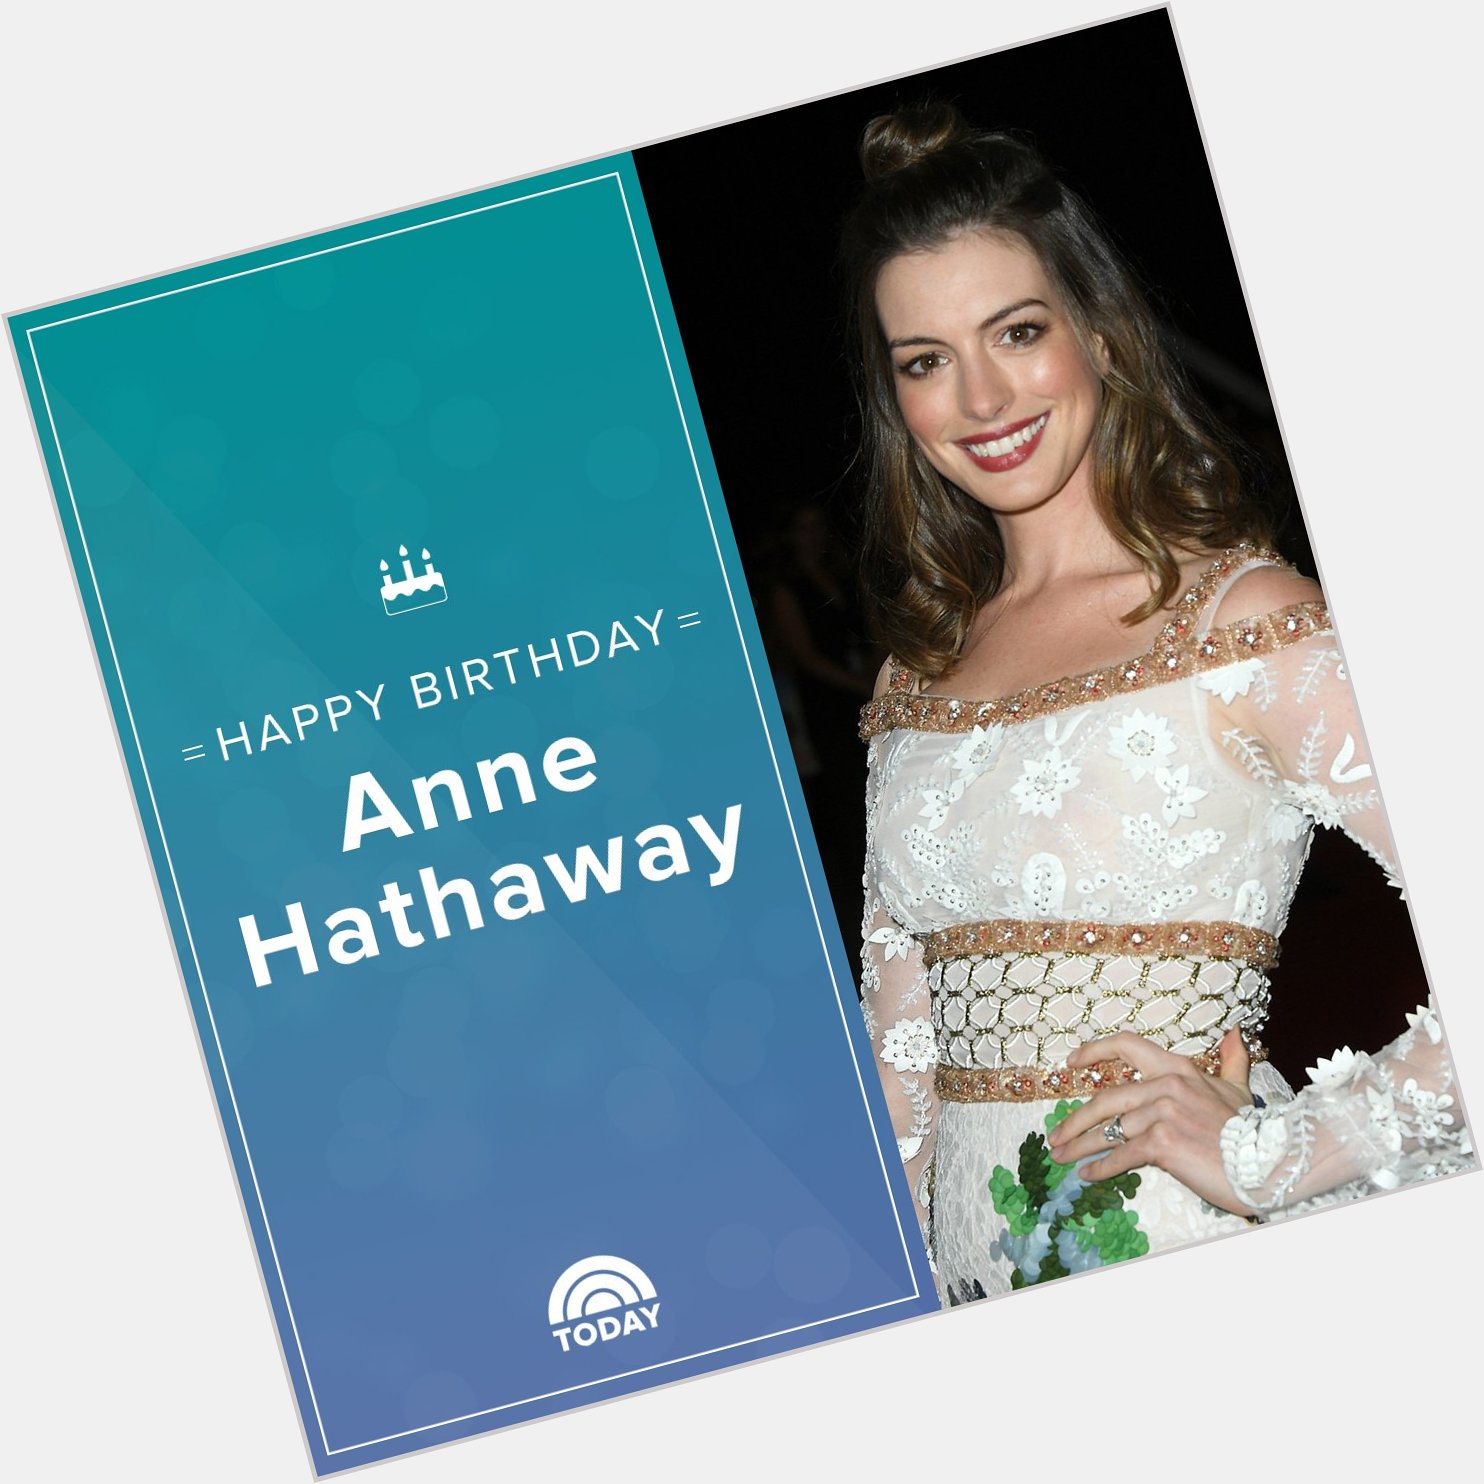 Happy birthday, Anne Hathaway!  